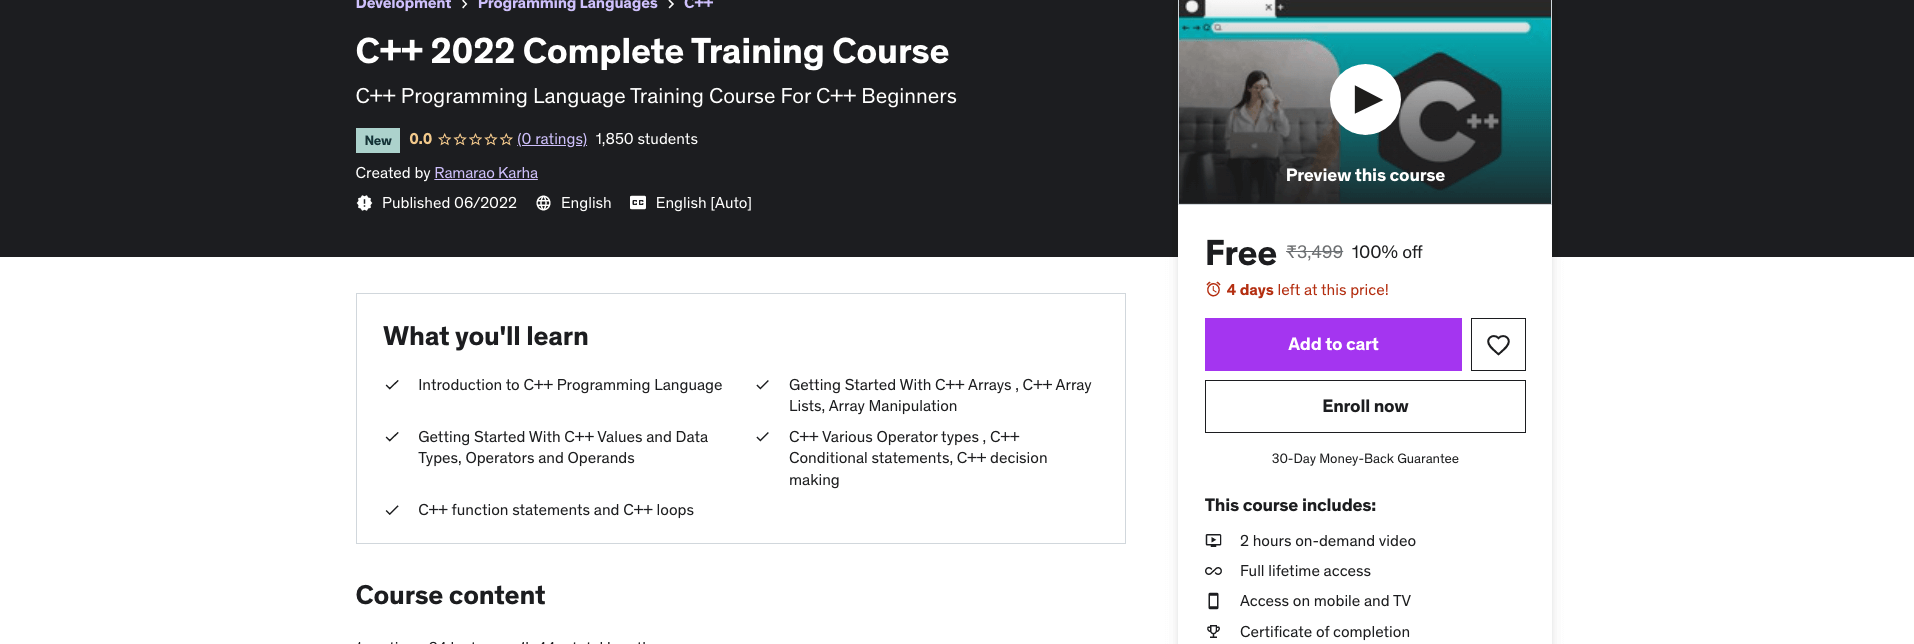 C++ 2022 Complete Training Course